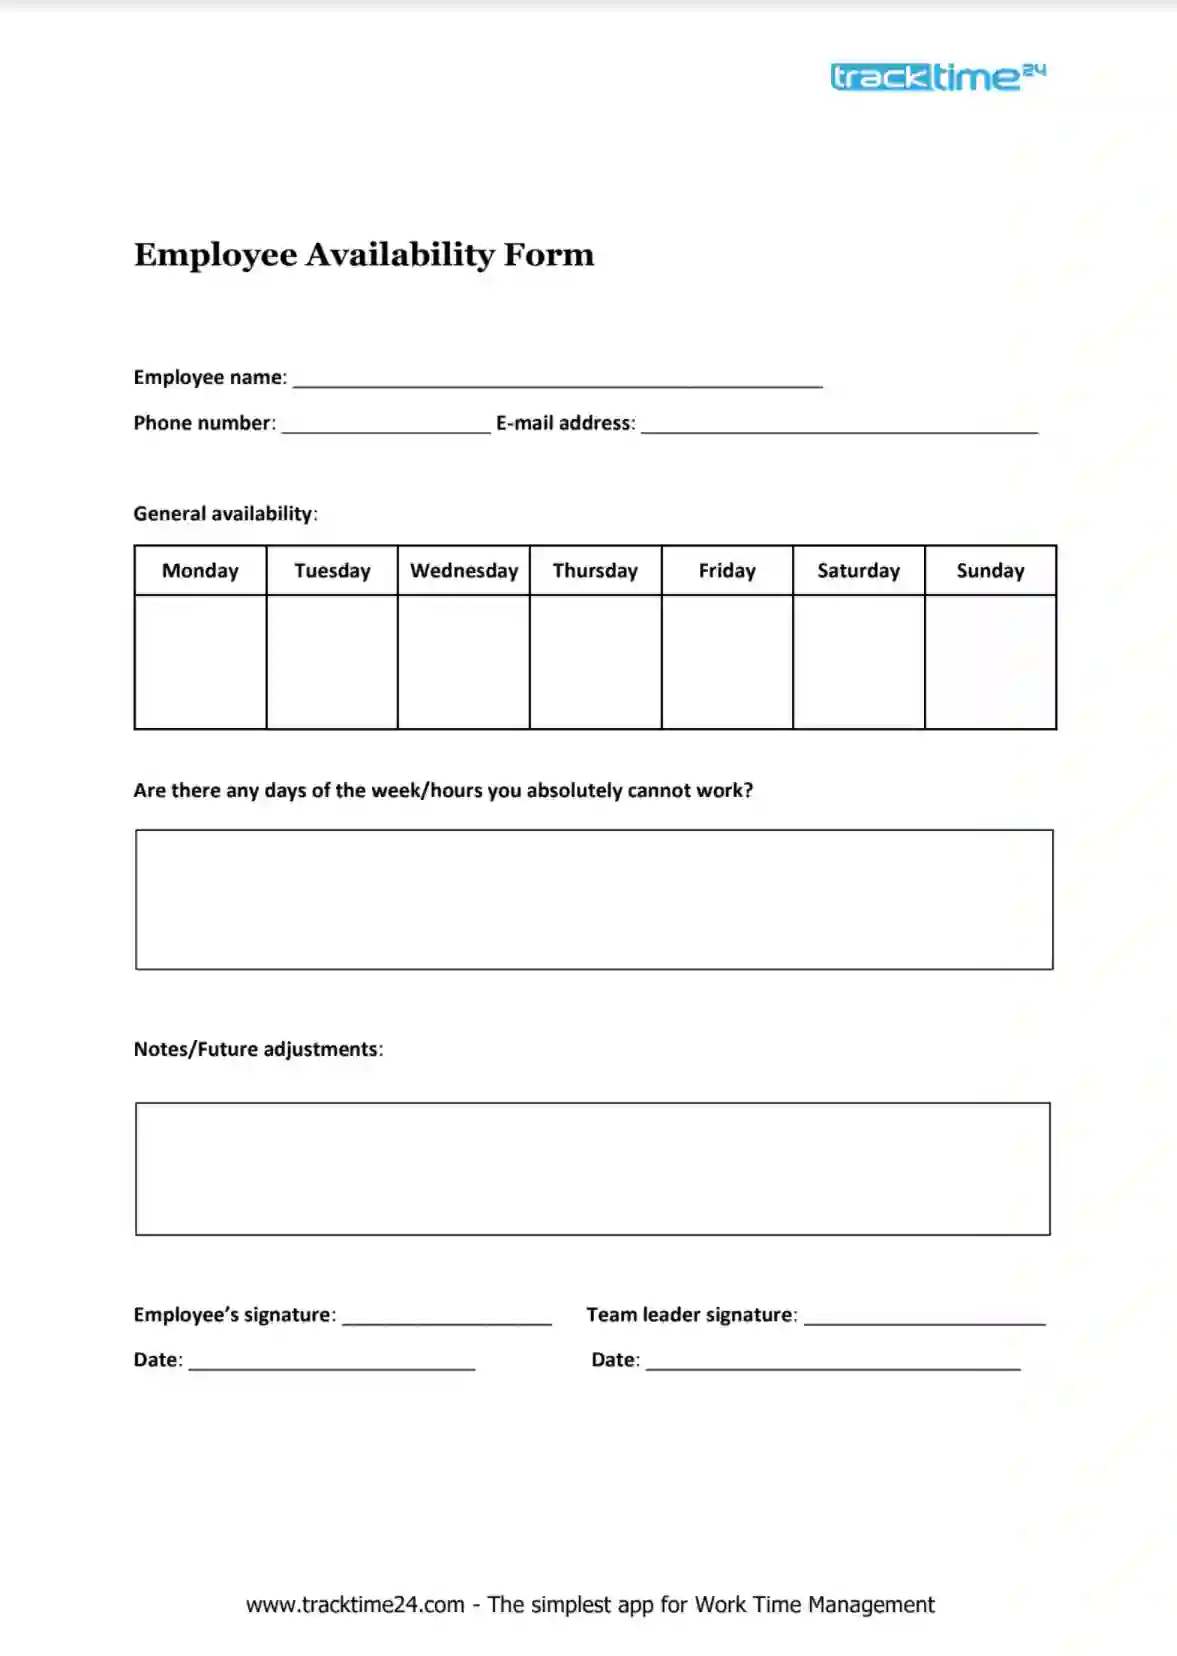 employee availability form